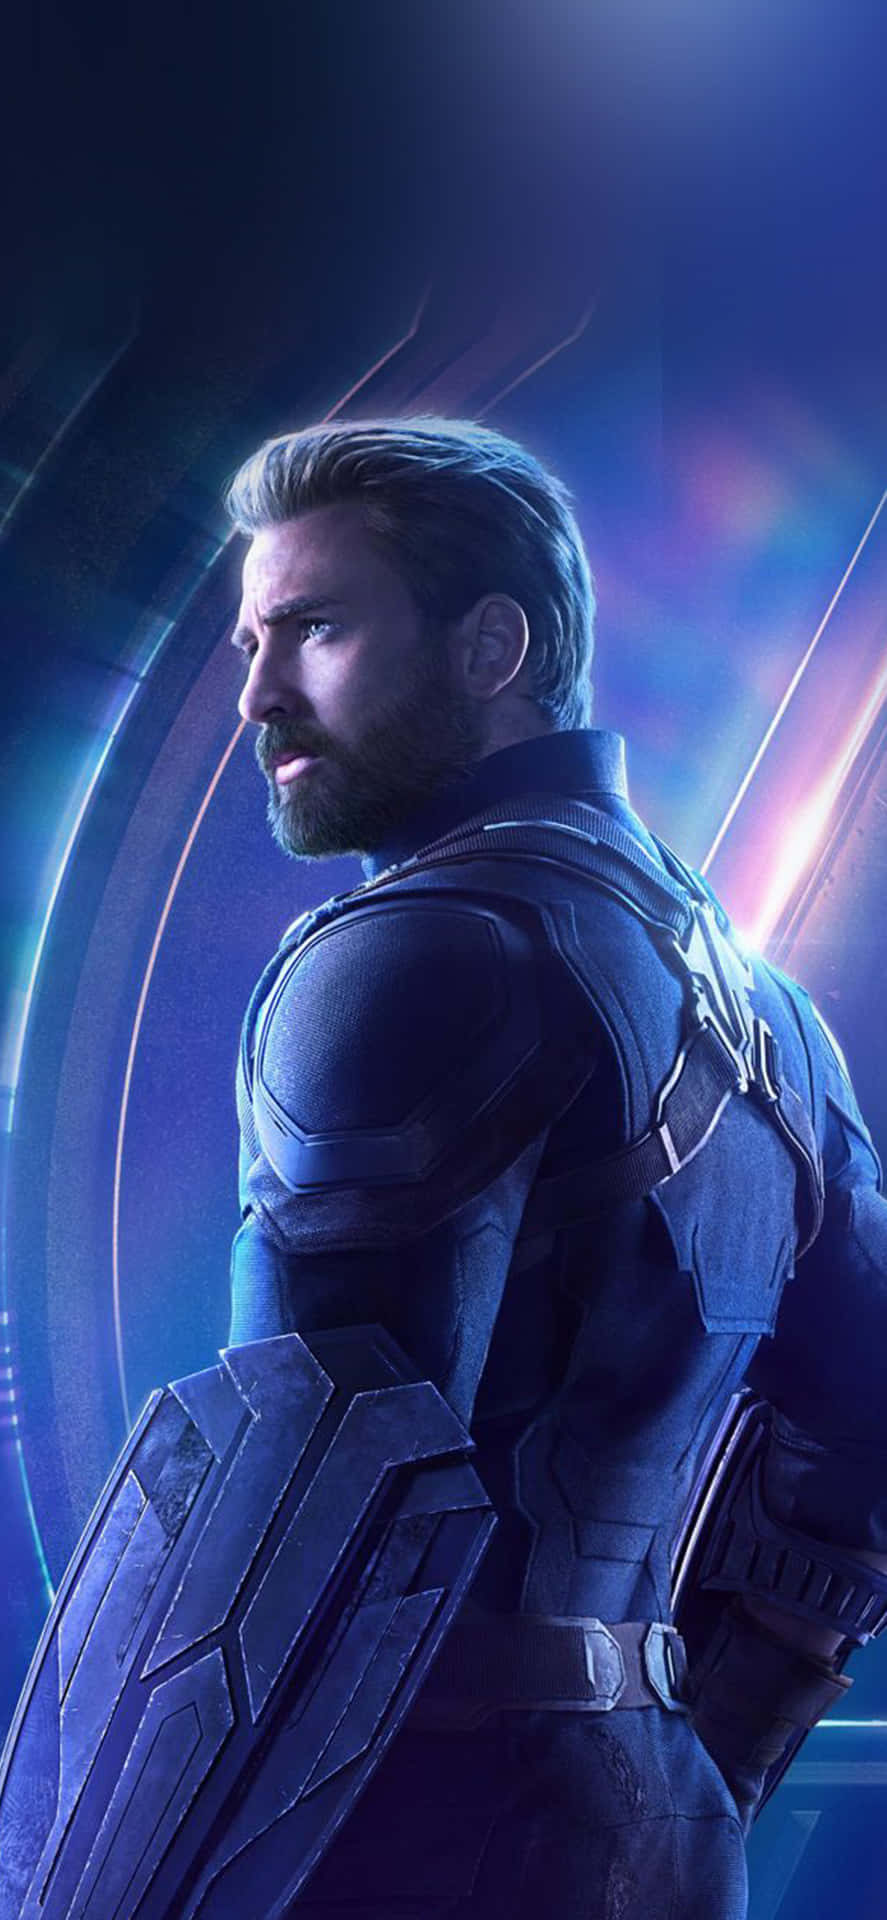 Sfondodel Poster Di Captain America Steve Rogers Degli Avengers Endgame